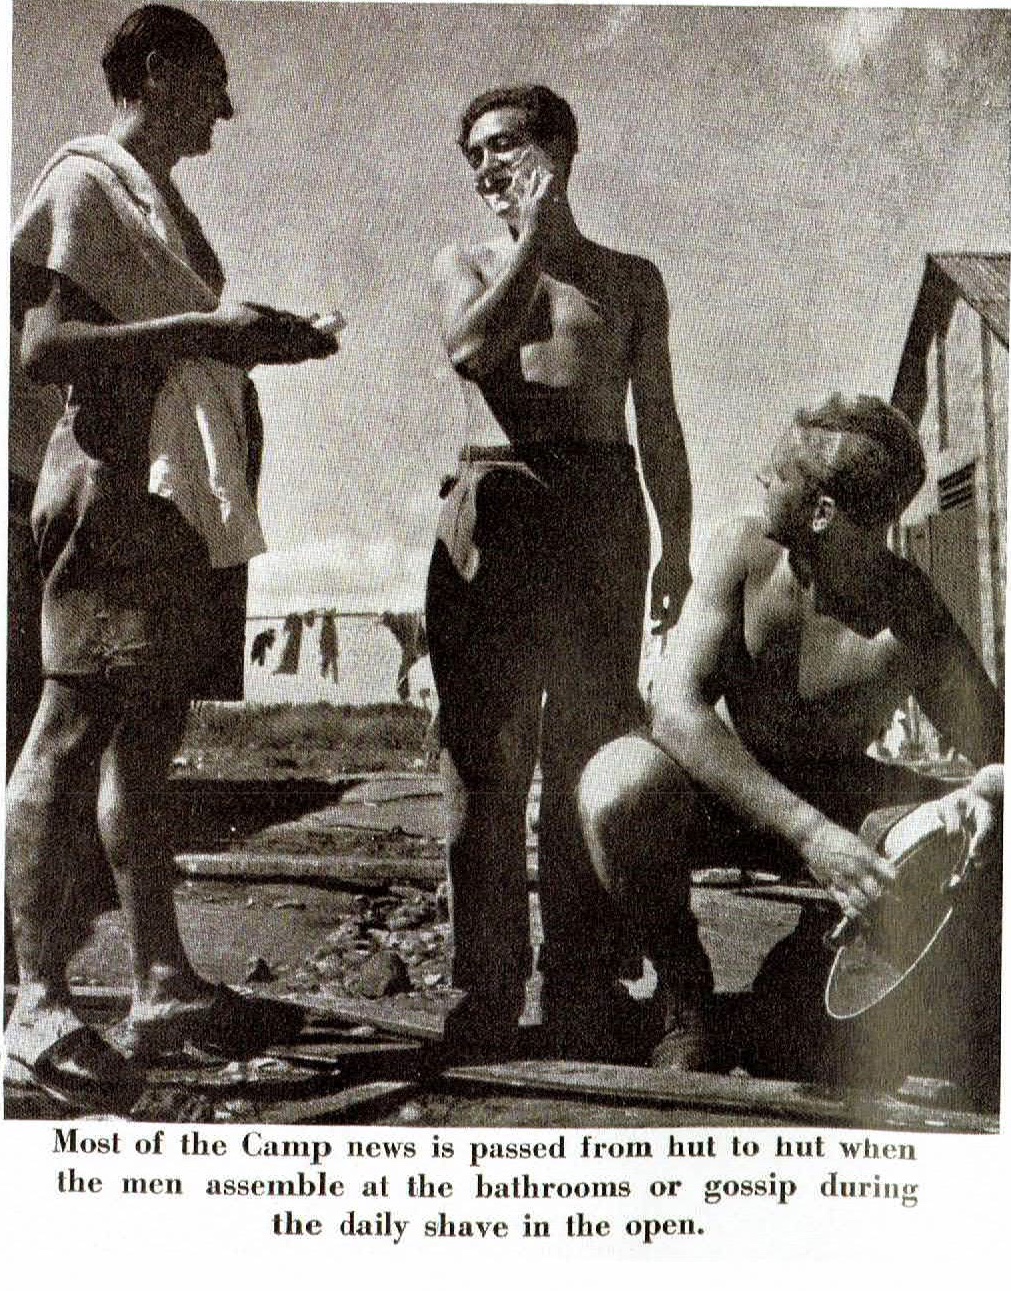 Kitchener camp, Oskar Reininger, Image from 'Some Victims of the Nazi Terror', Magazine 1939